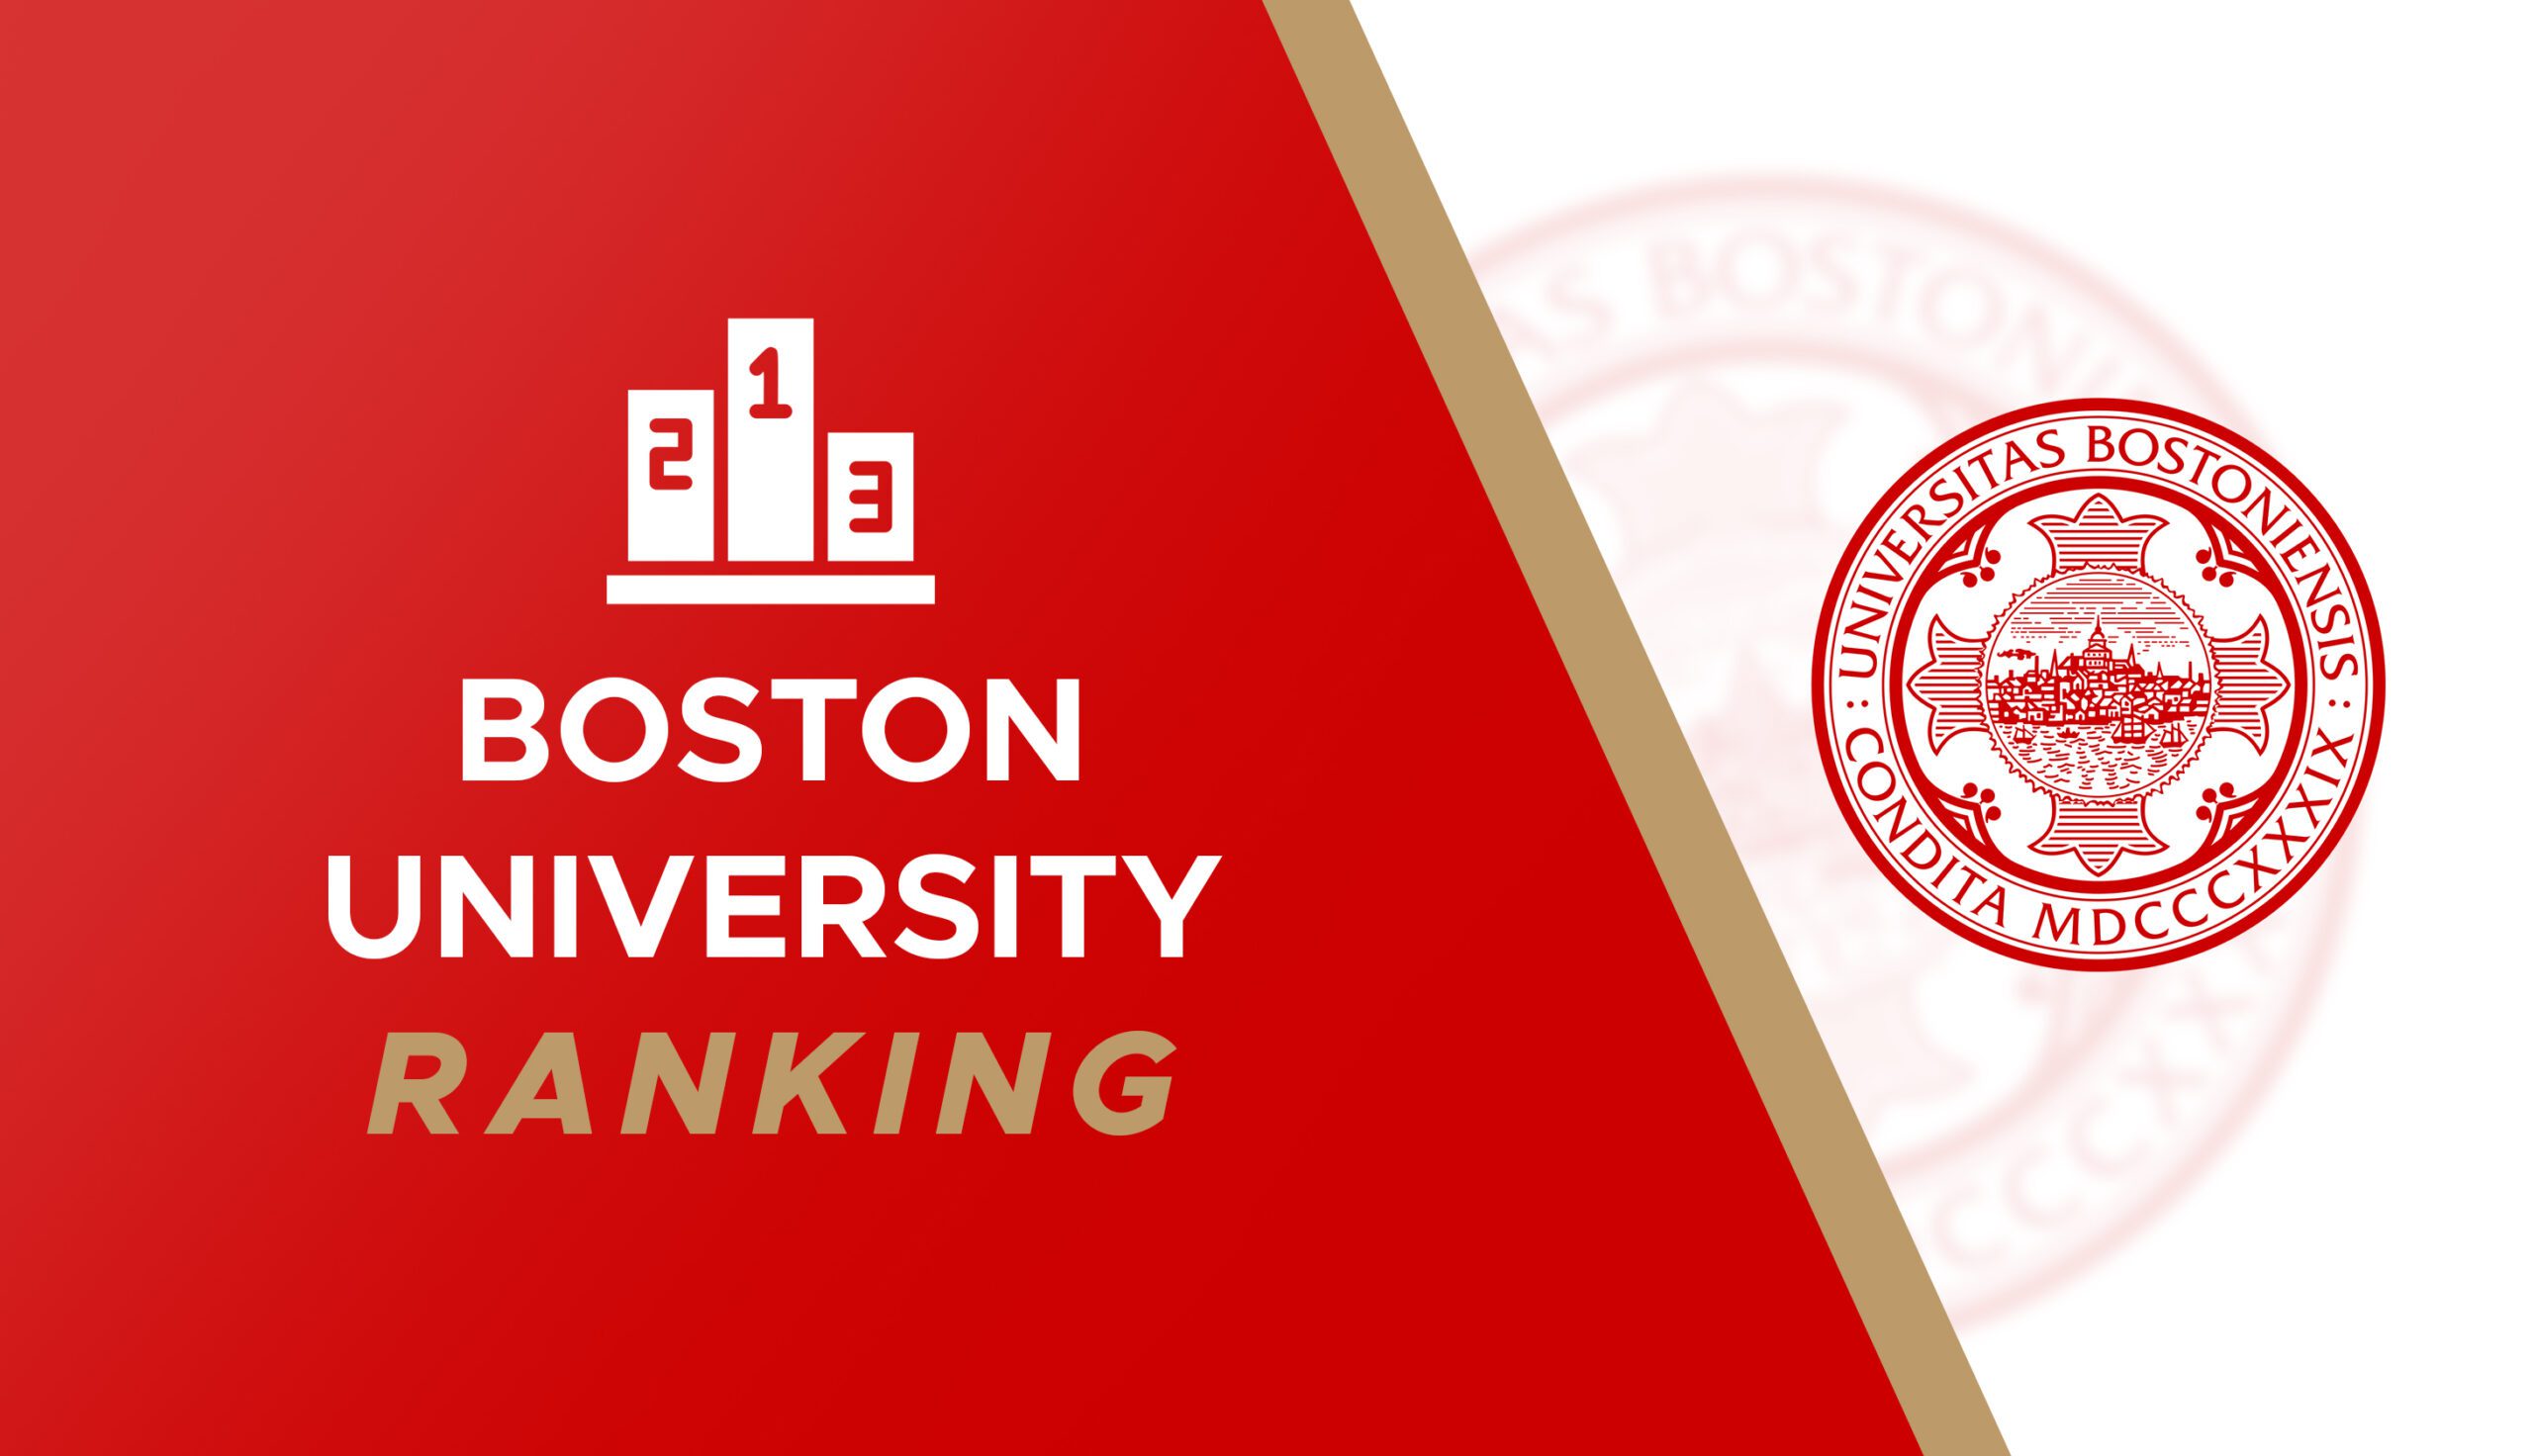 Boston University Ranking Expert Guide